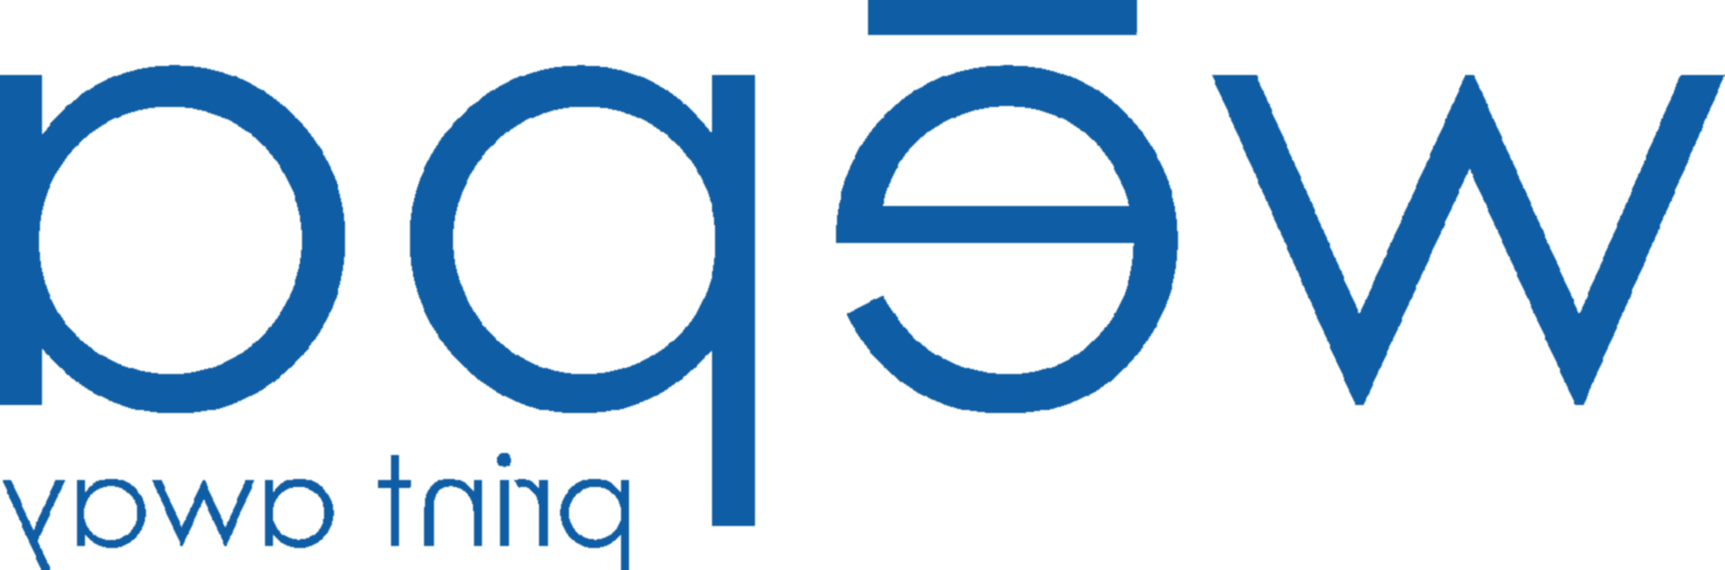 wepa logo